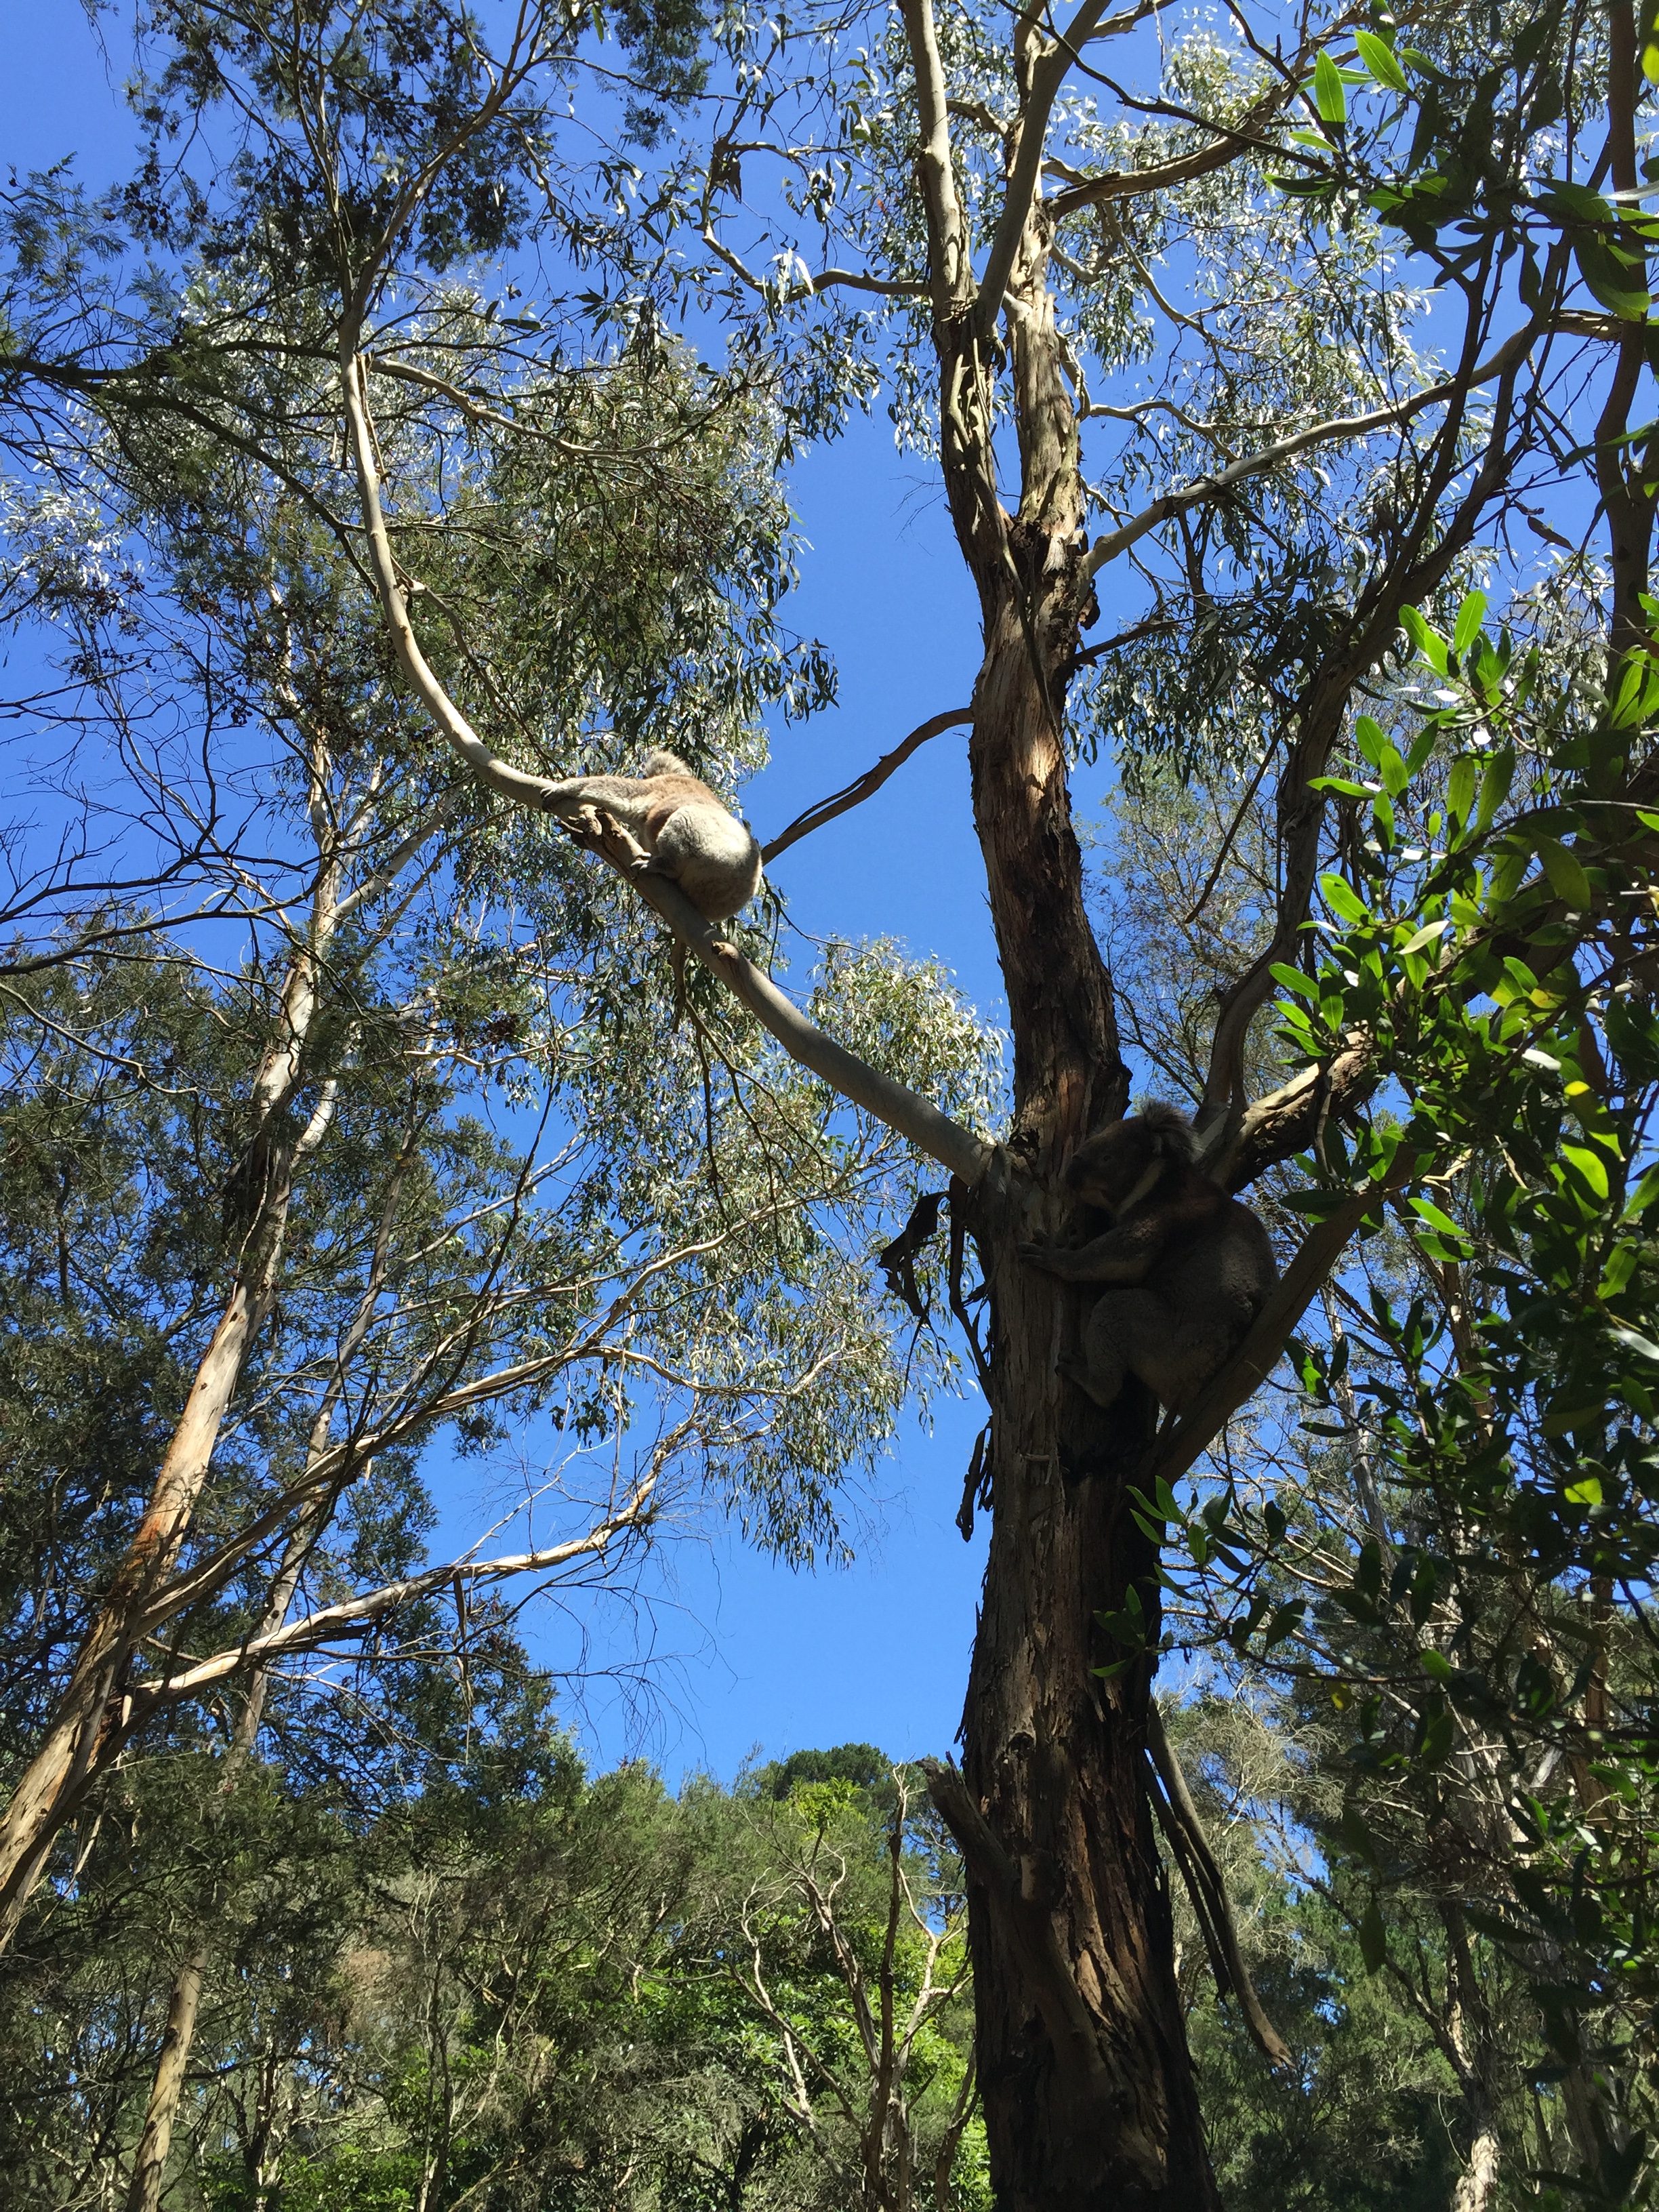 Koala watching from above.